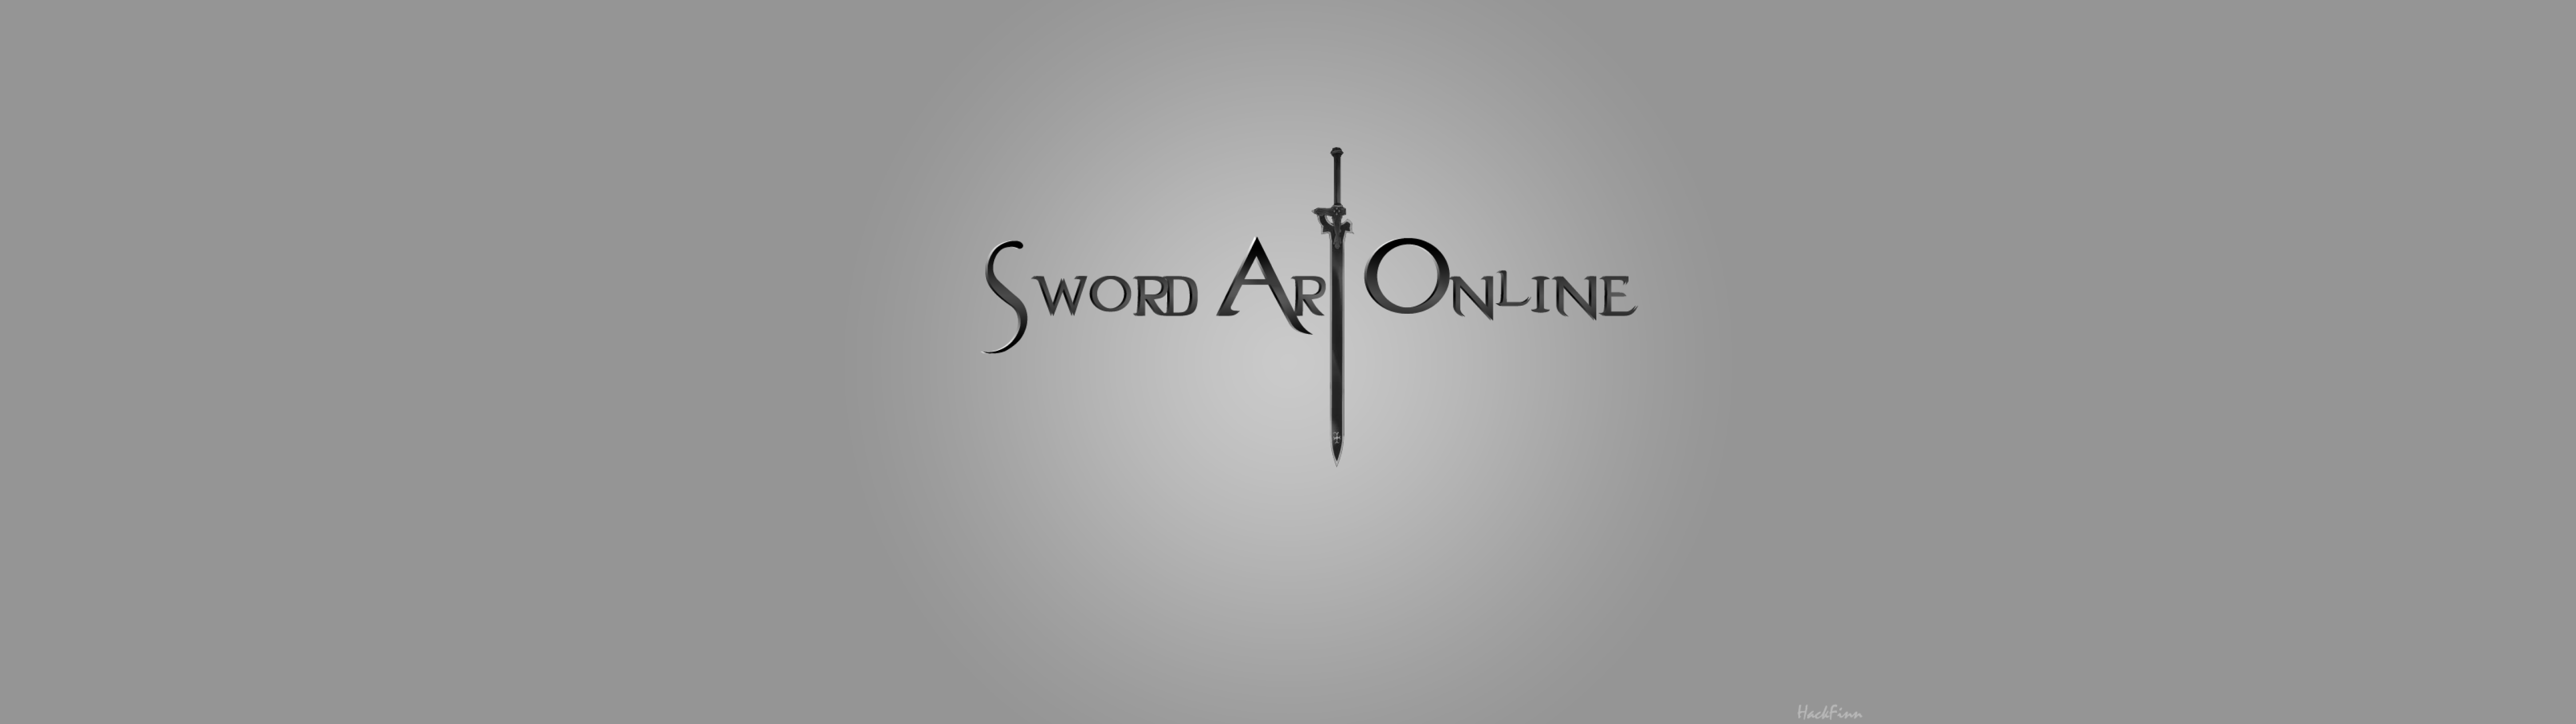 Sword Art Online Anime Sword Minimalism Simple Background 5120x1440